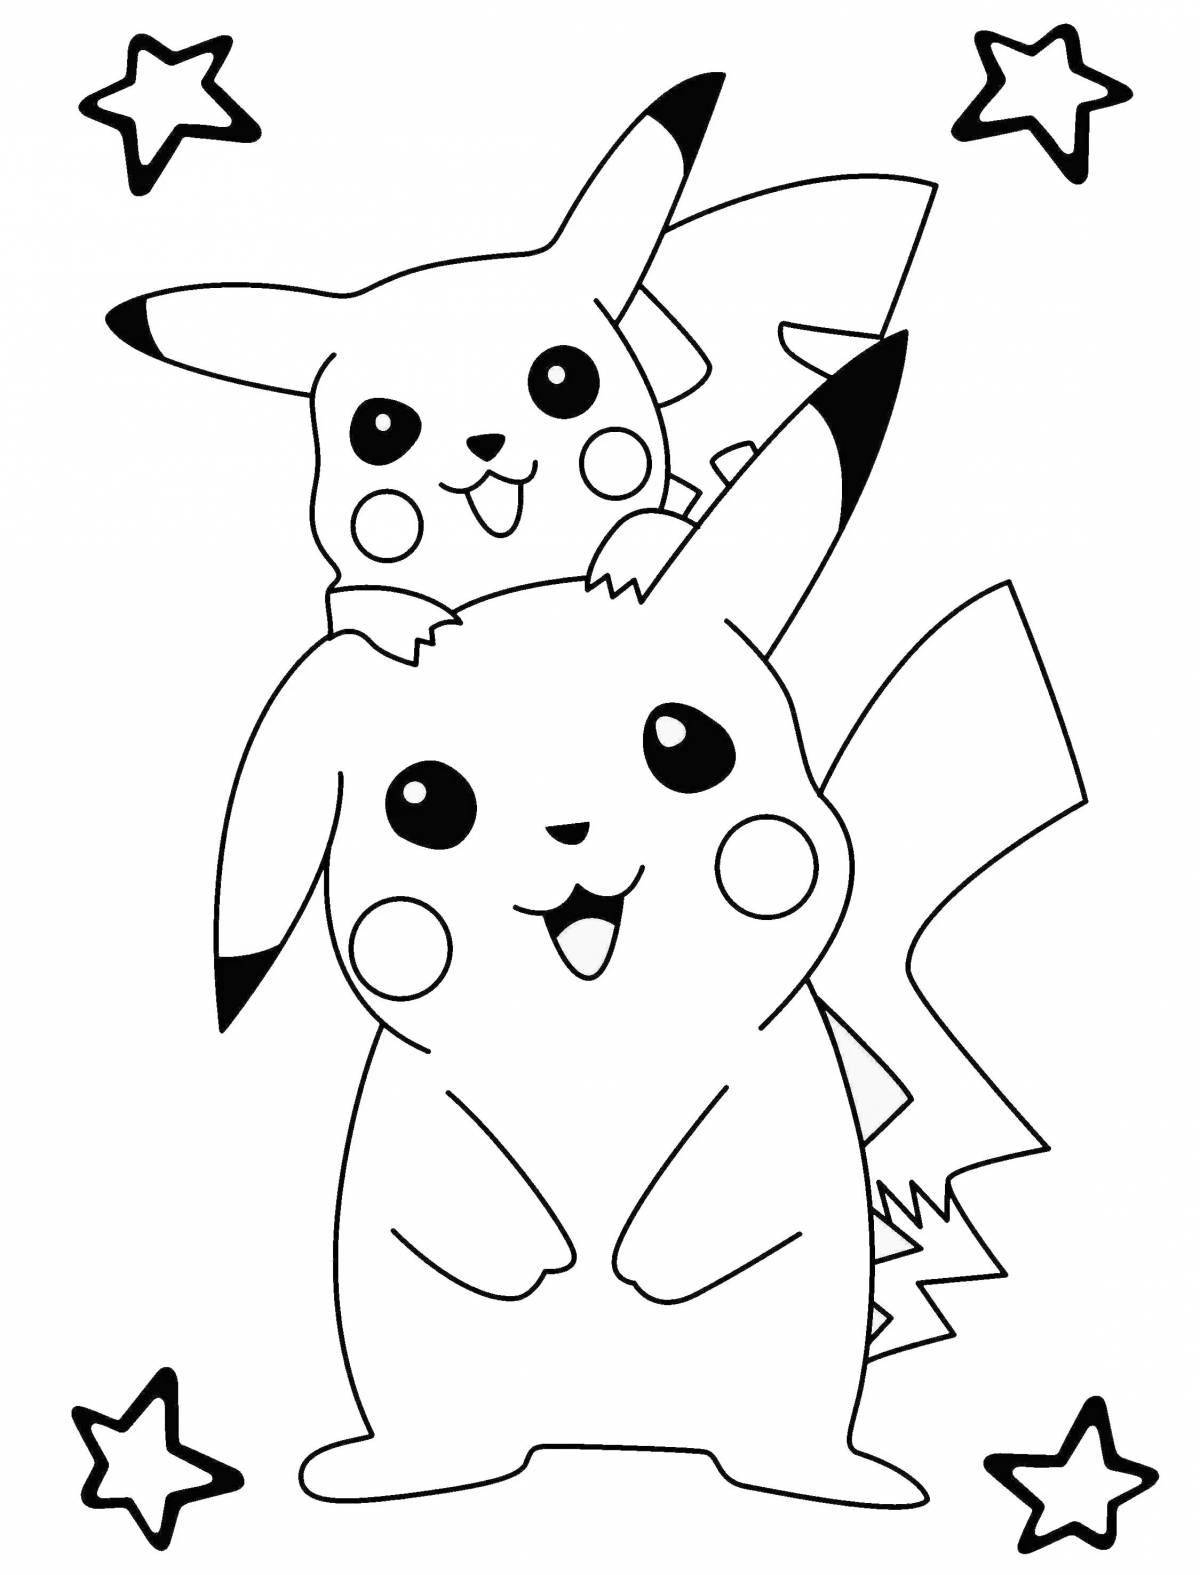 Pikachu fun coloring book